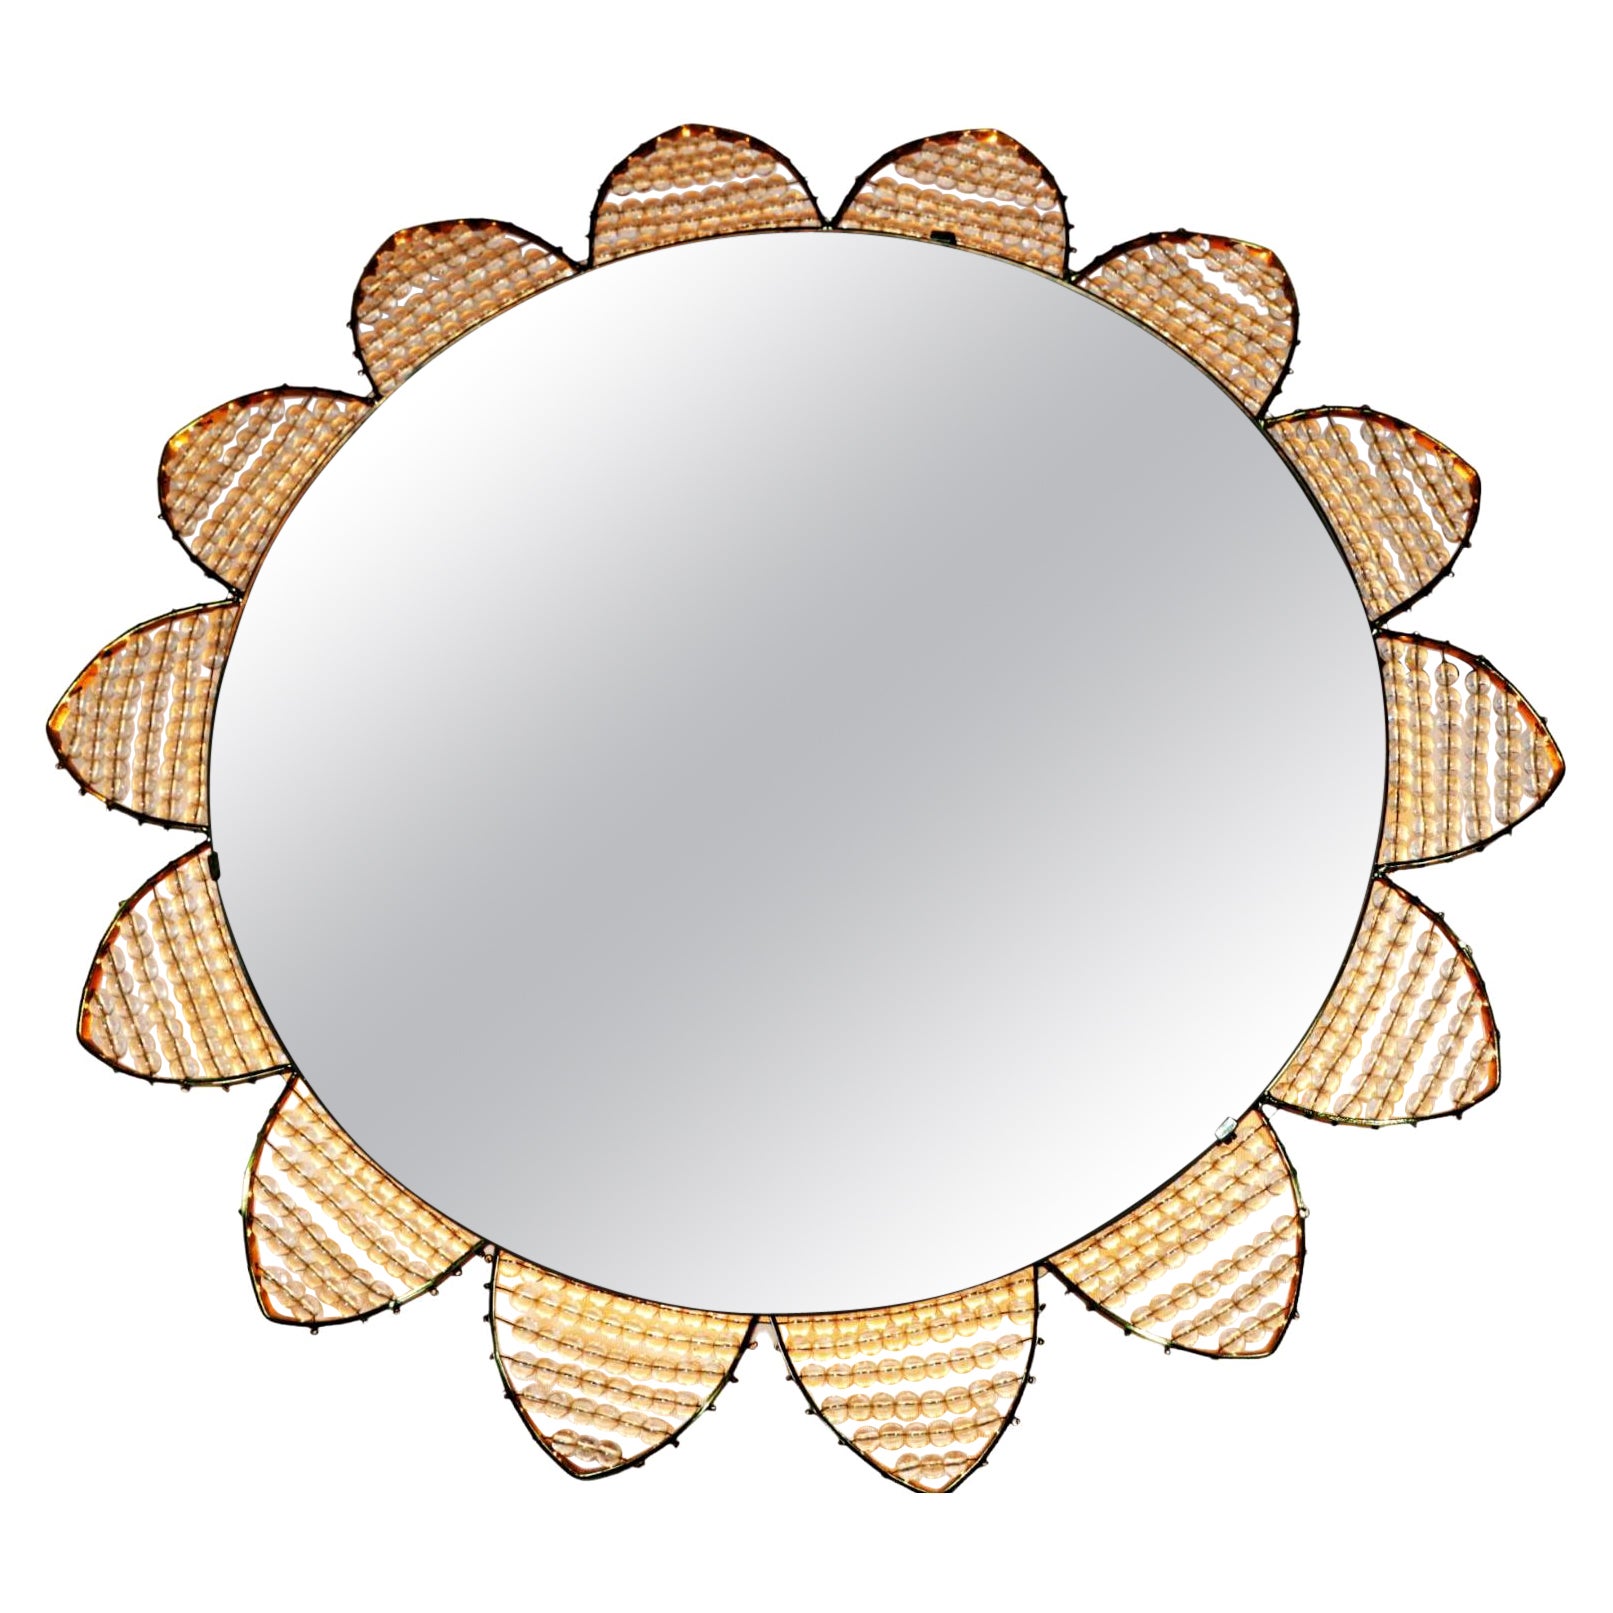 Decorative Illuminated Mirror, Sunburst or Flower Design, Pearls, 1970s For Sale